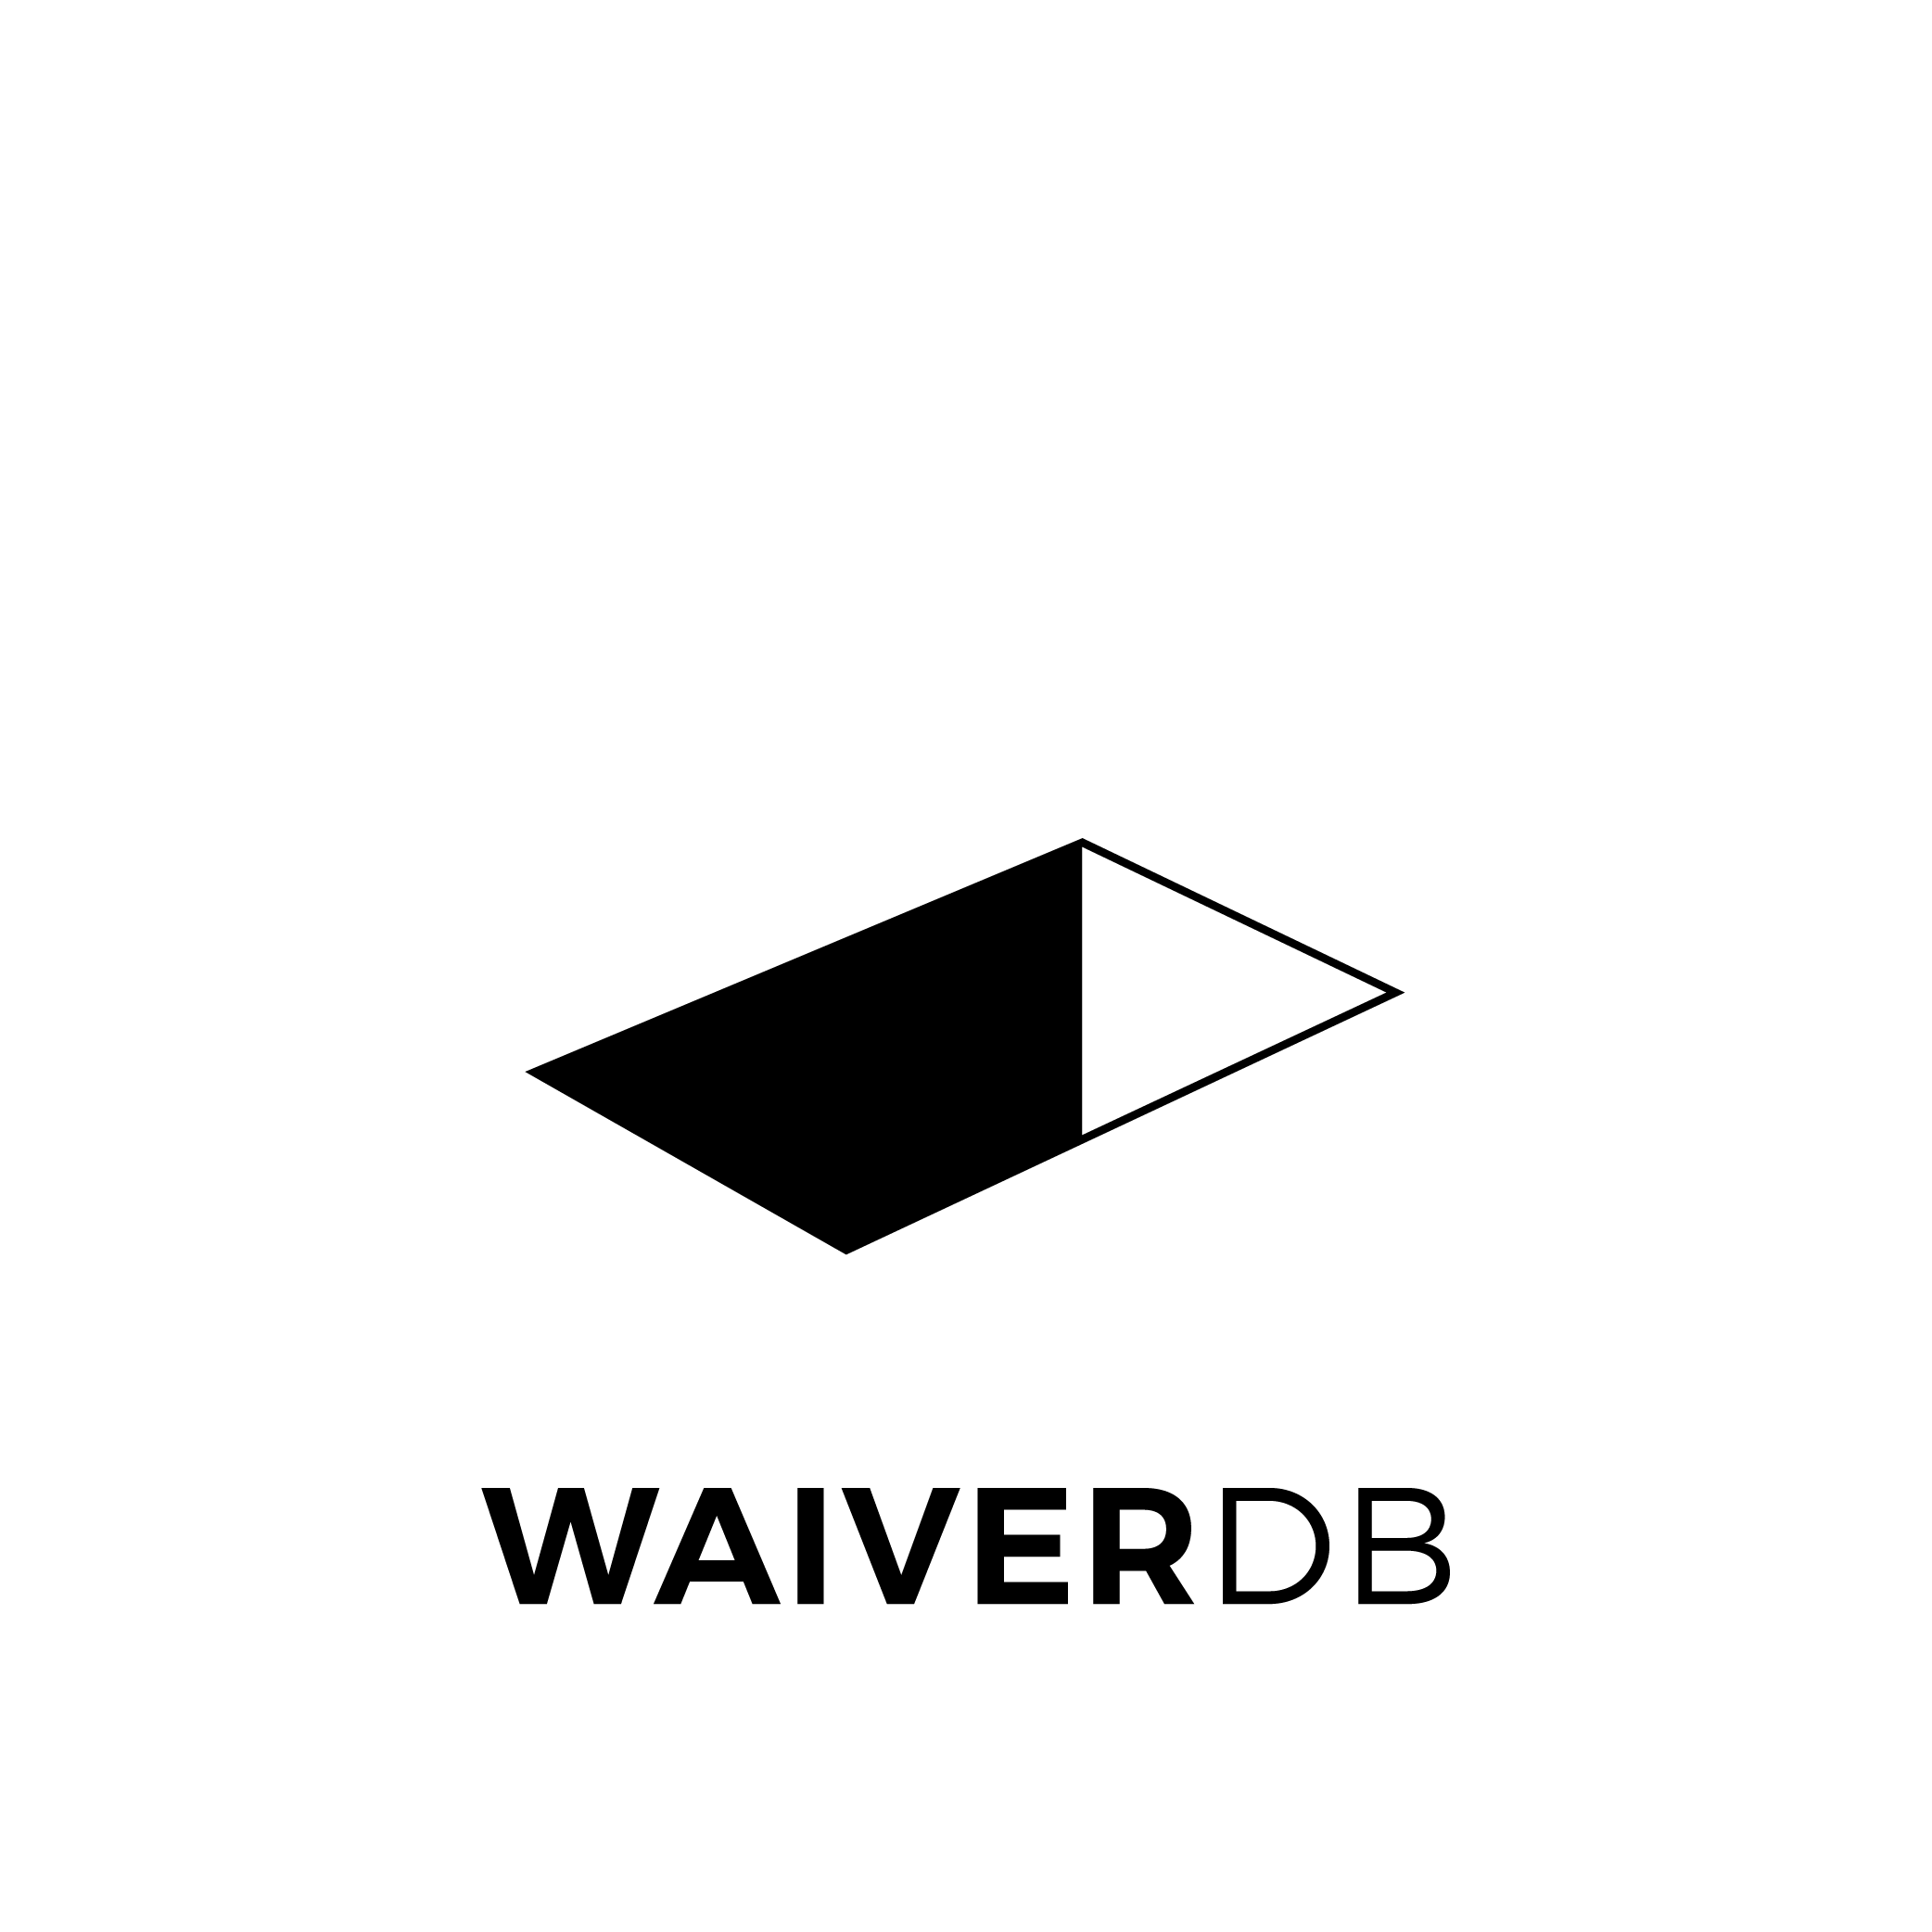 WaiverDB logo - black